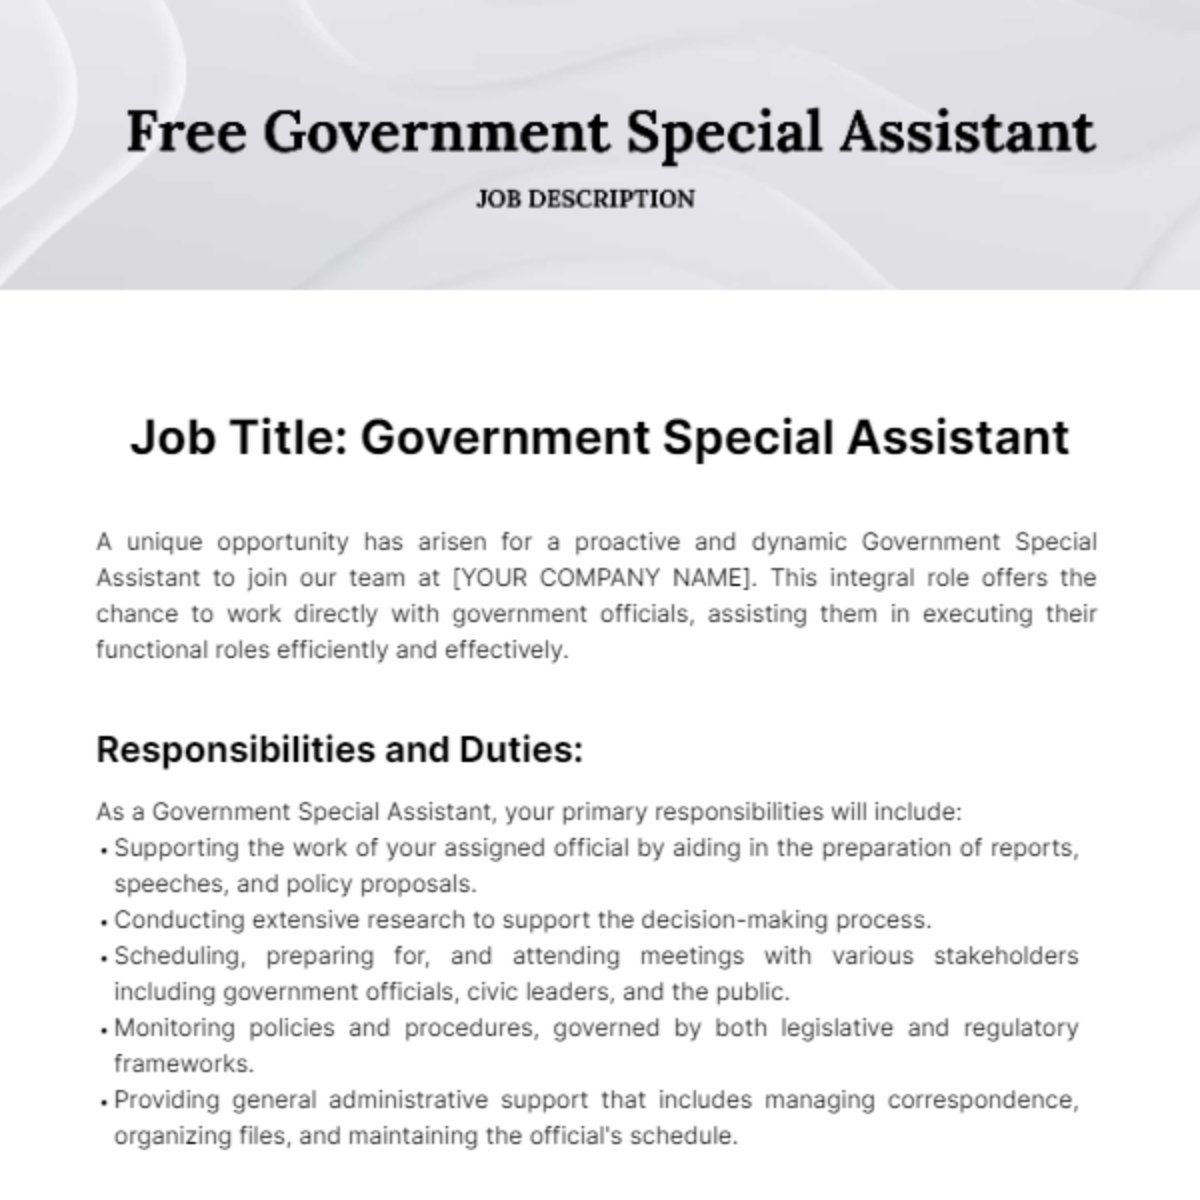 Government Special Assistant Job Description Template